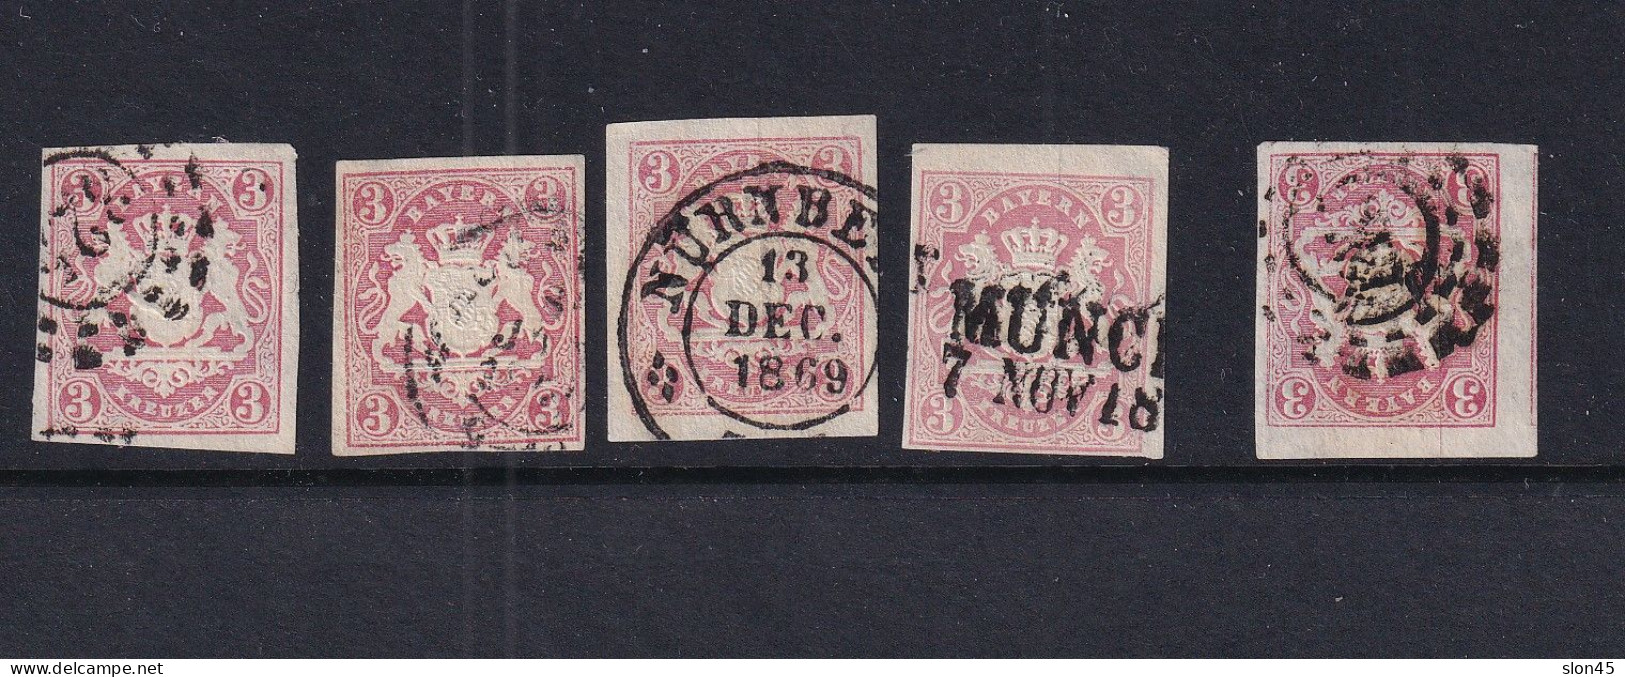 German States Bavaria 1867 Used 5kr Small Accumulation 16131 - Mint